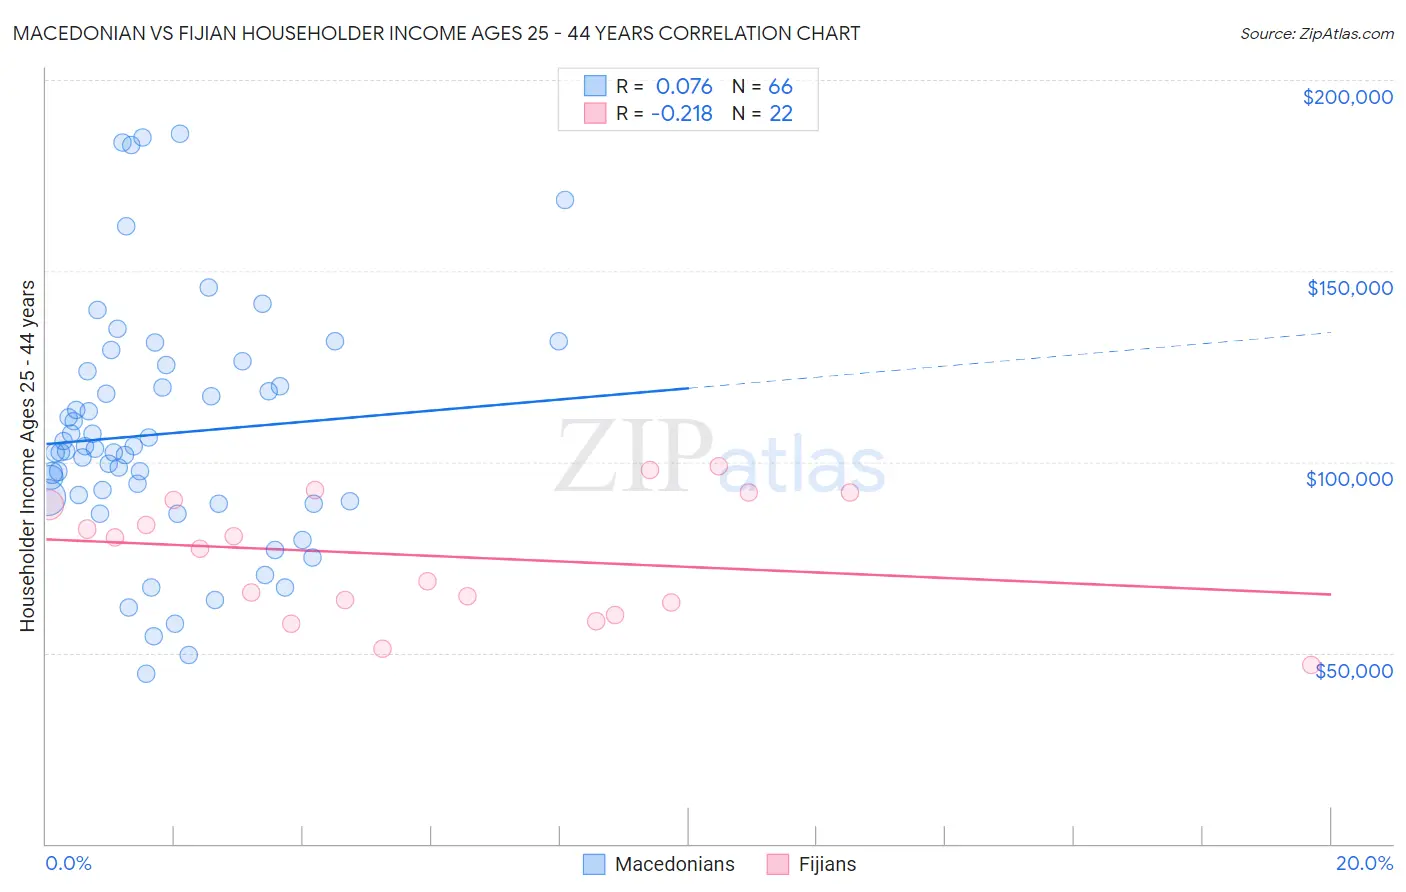 Macedonian vs Fijian Householder Income Ages 25 - 44 years